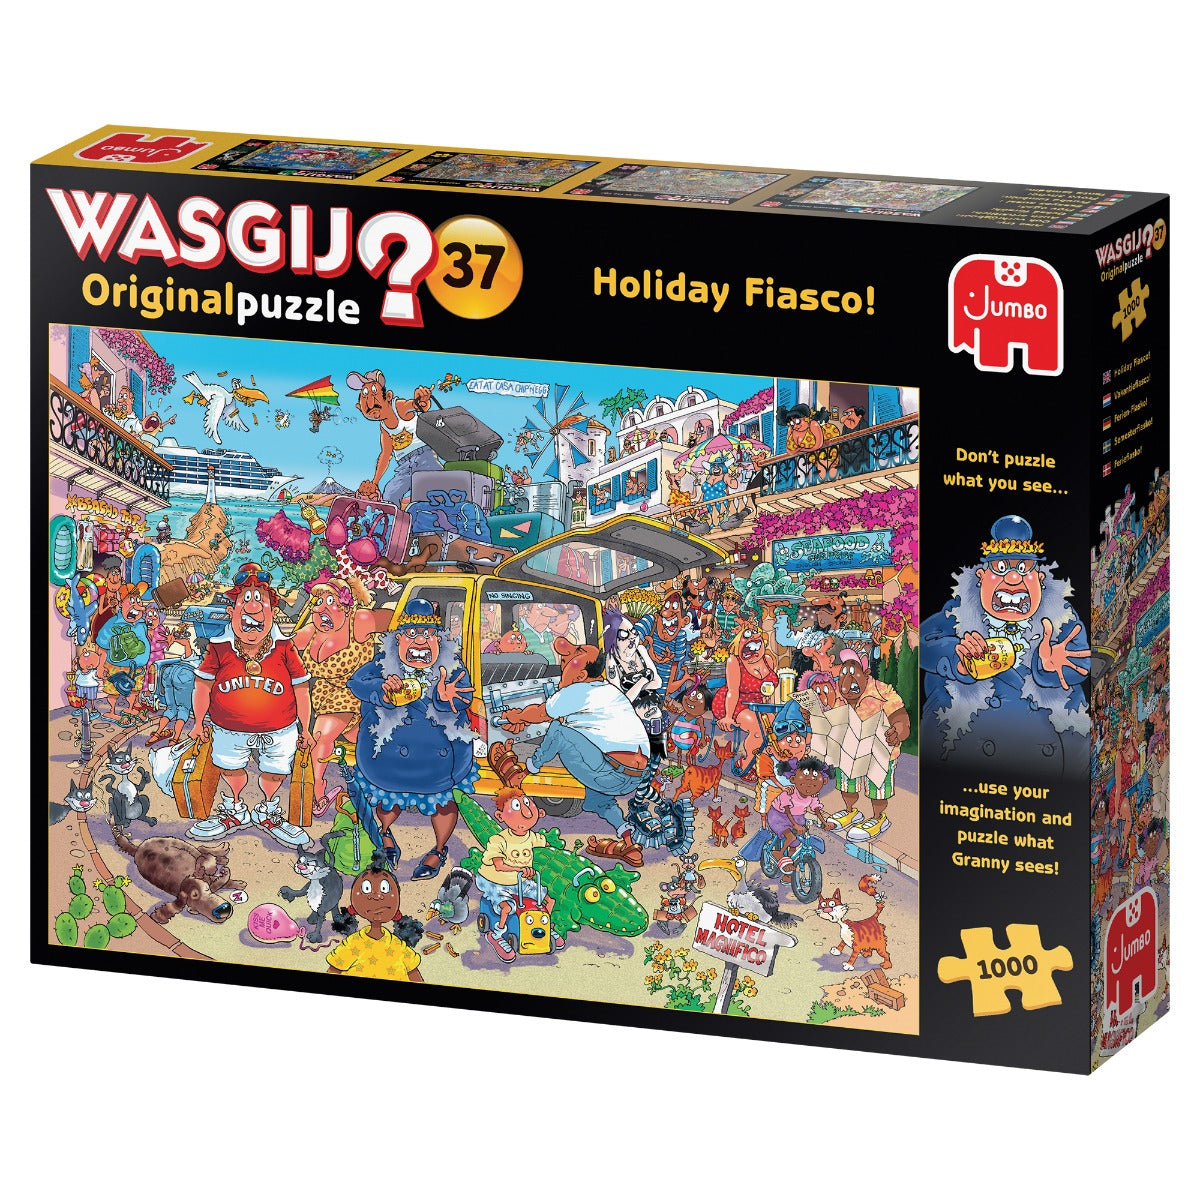 Wasgij Original 37 - Holiday Fiasco - 1000 Piece Jigsaw Puzzles